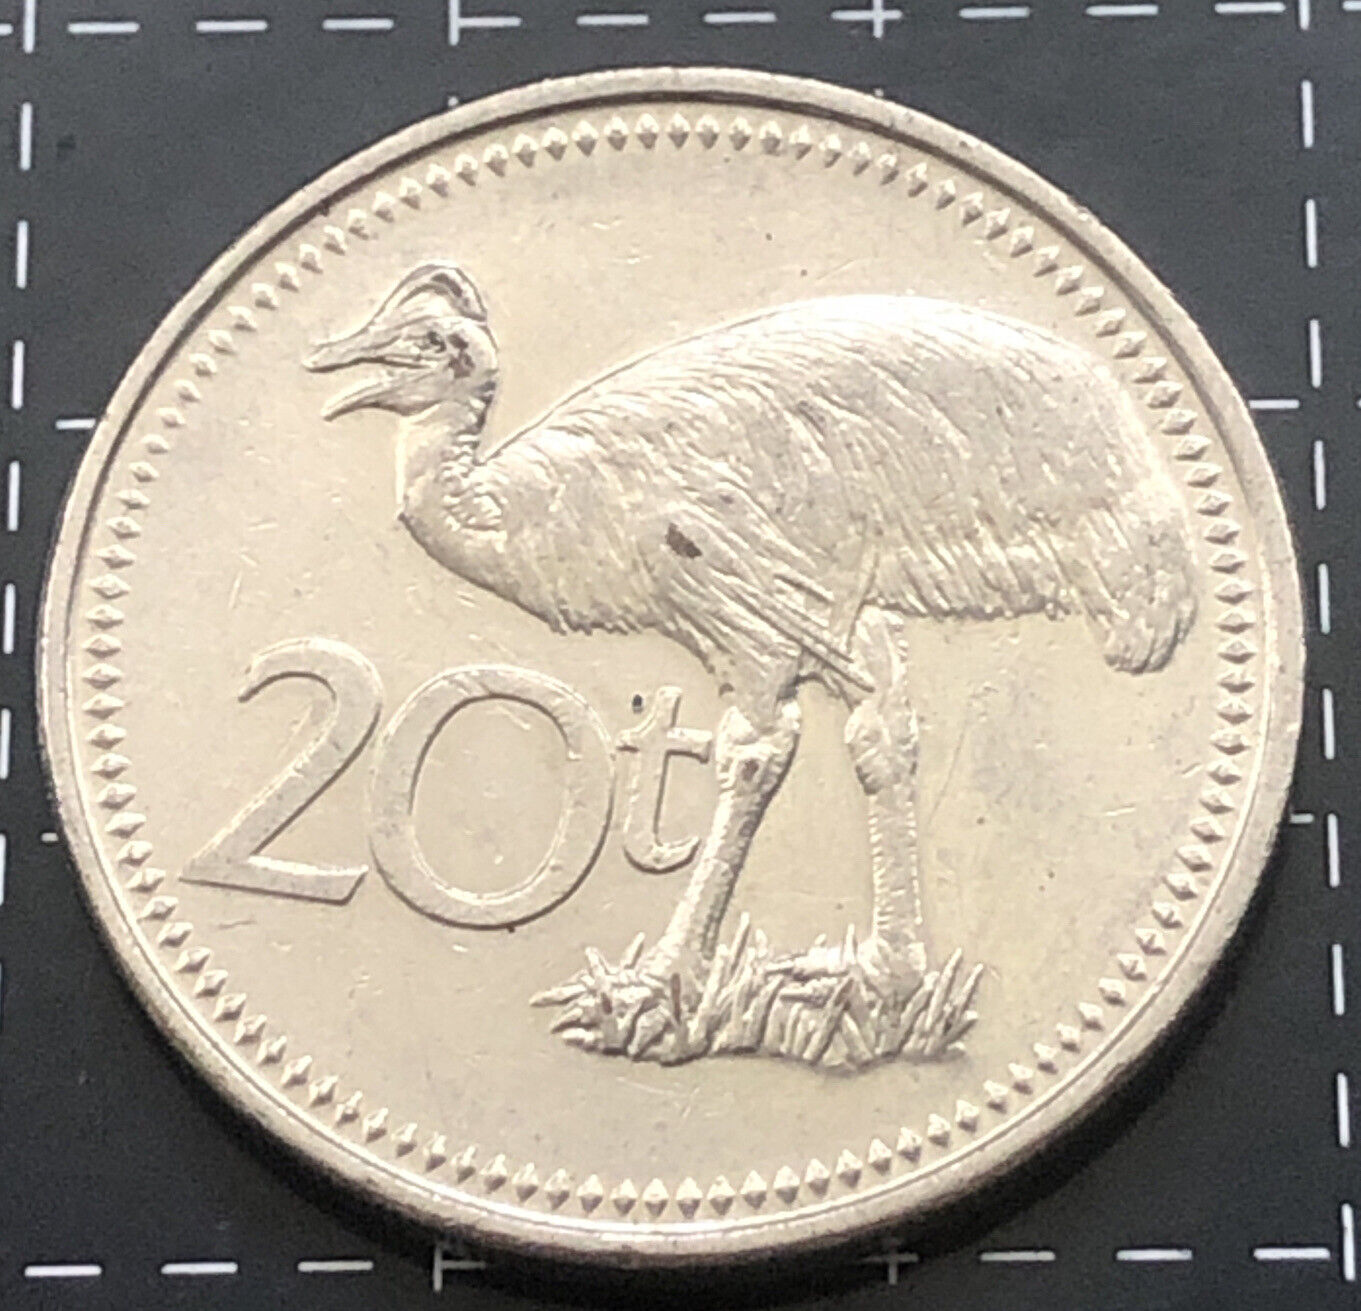 Papua New Guinea Coins